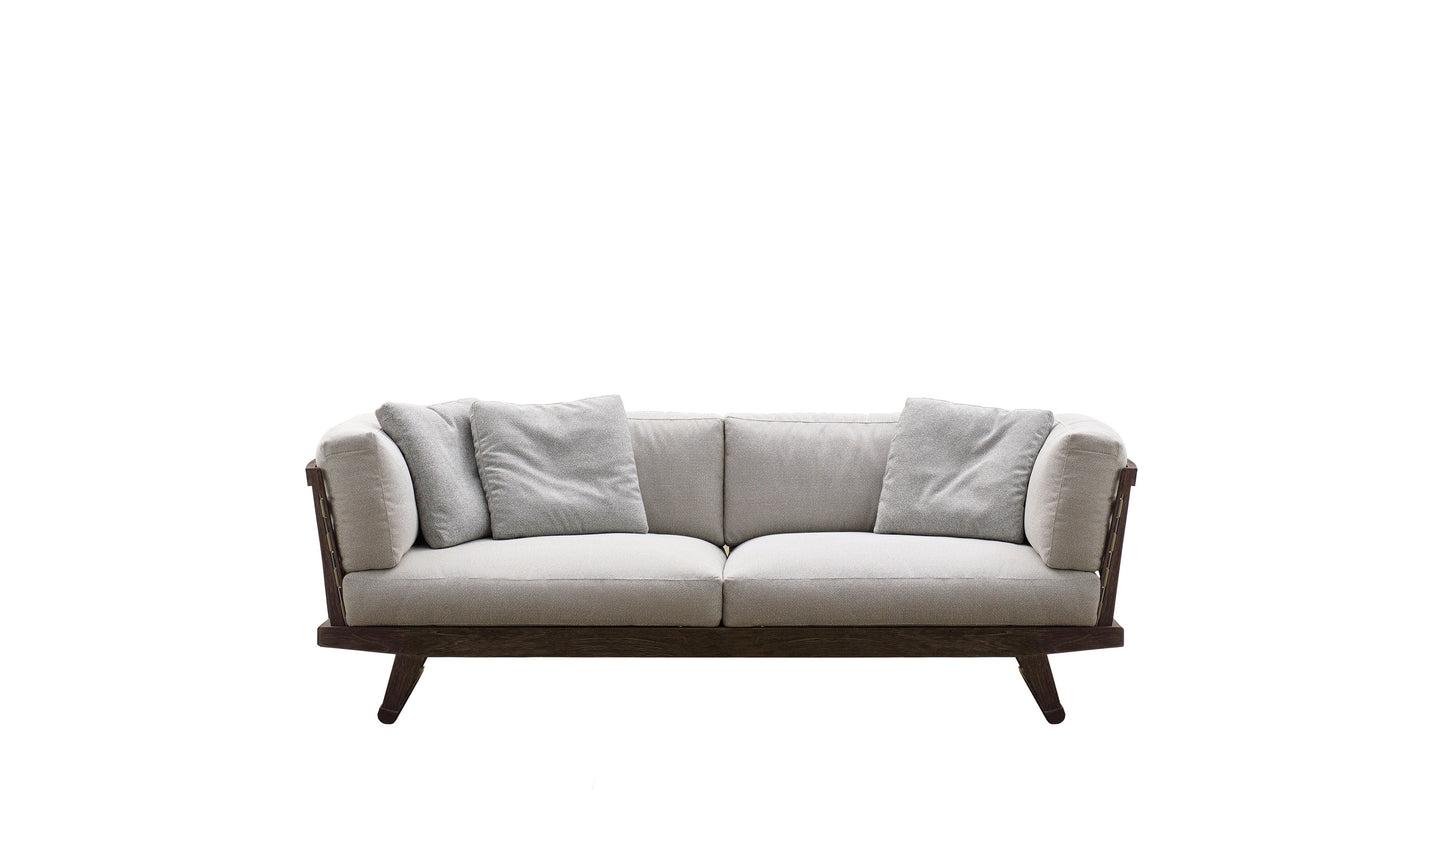 B&B italia Gio Outdoor sofa